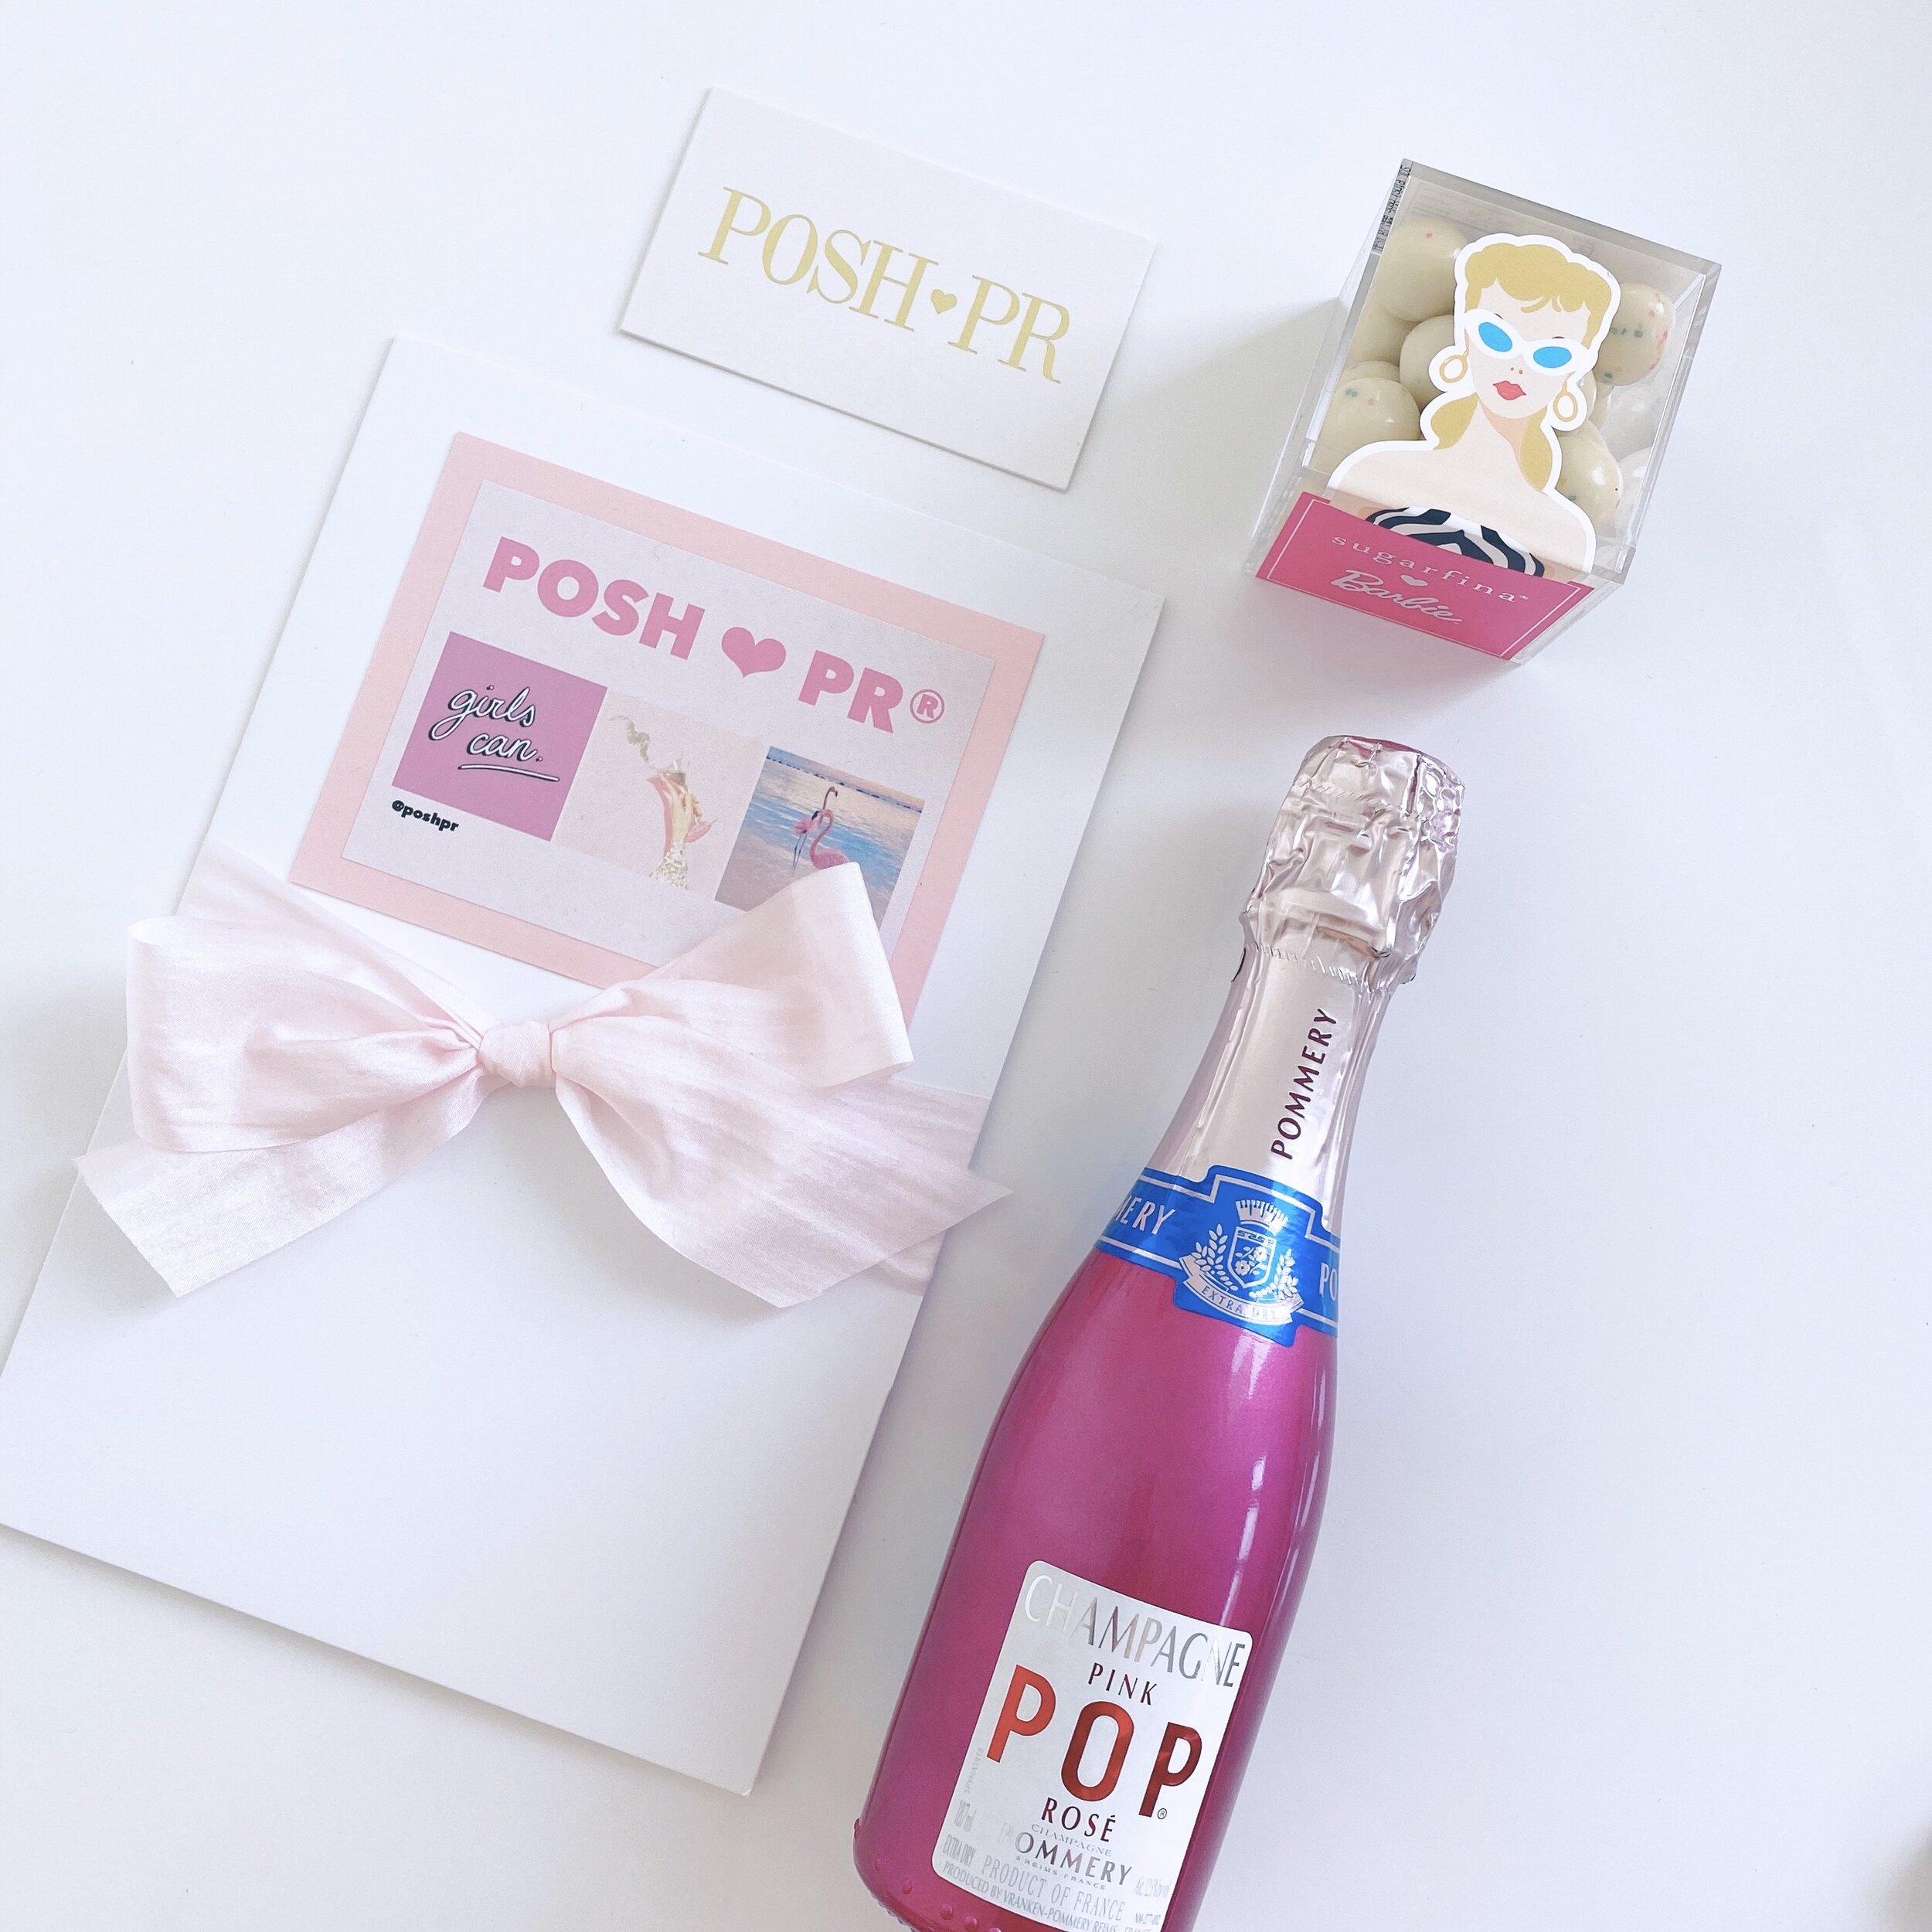 POSH-PR-Blog-Press-Kit-Pretty-Pink-Packages-Elevated-Details-Champagne-Sugarfina-Bows-Social-Media-Agency-Luxury-Branding-Branded-Packing-4.JPG